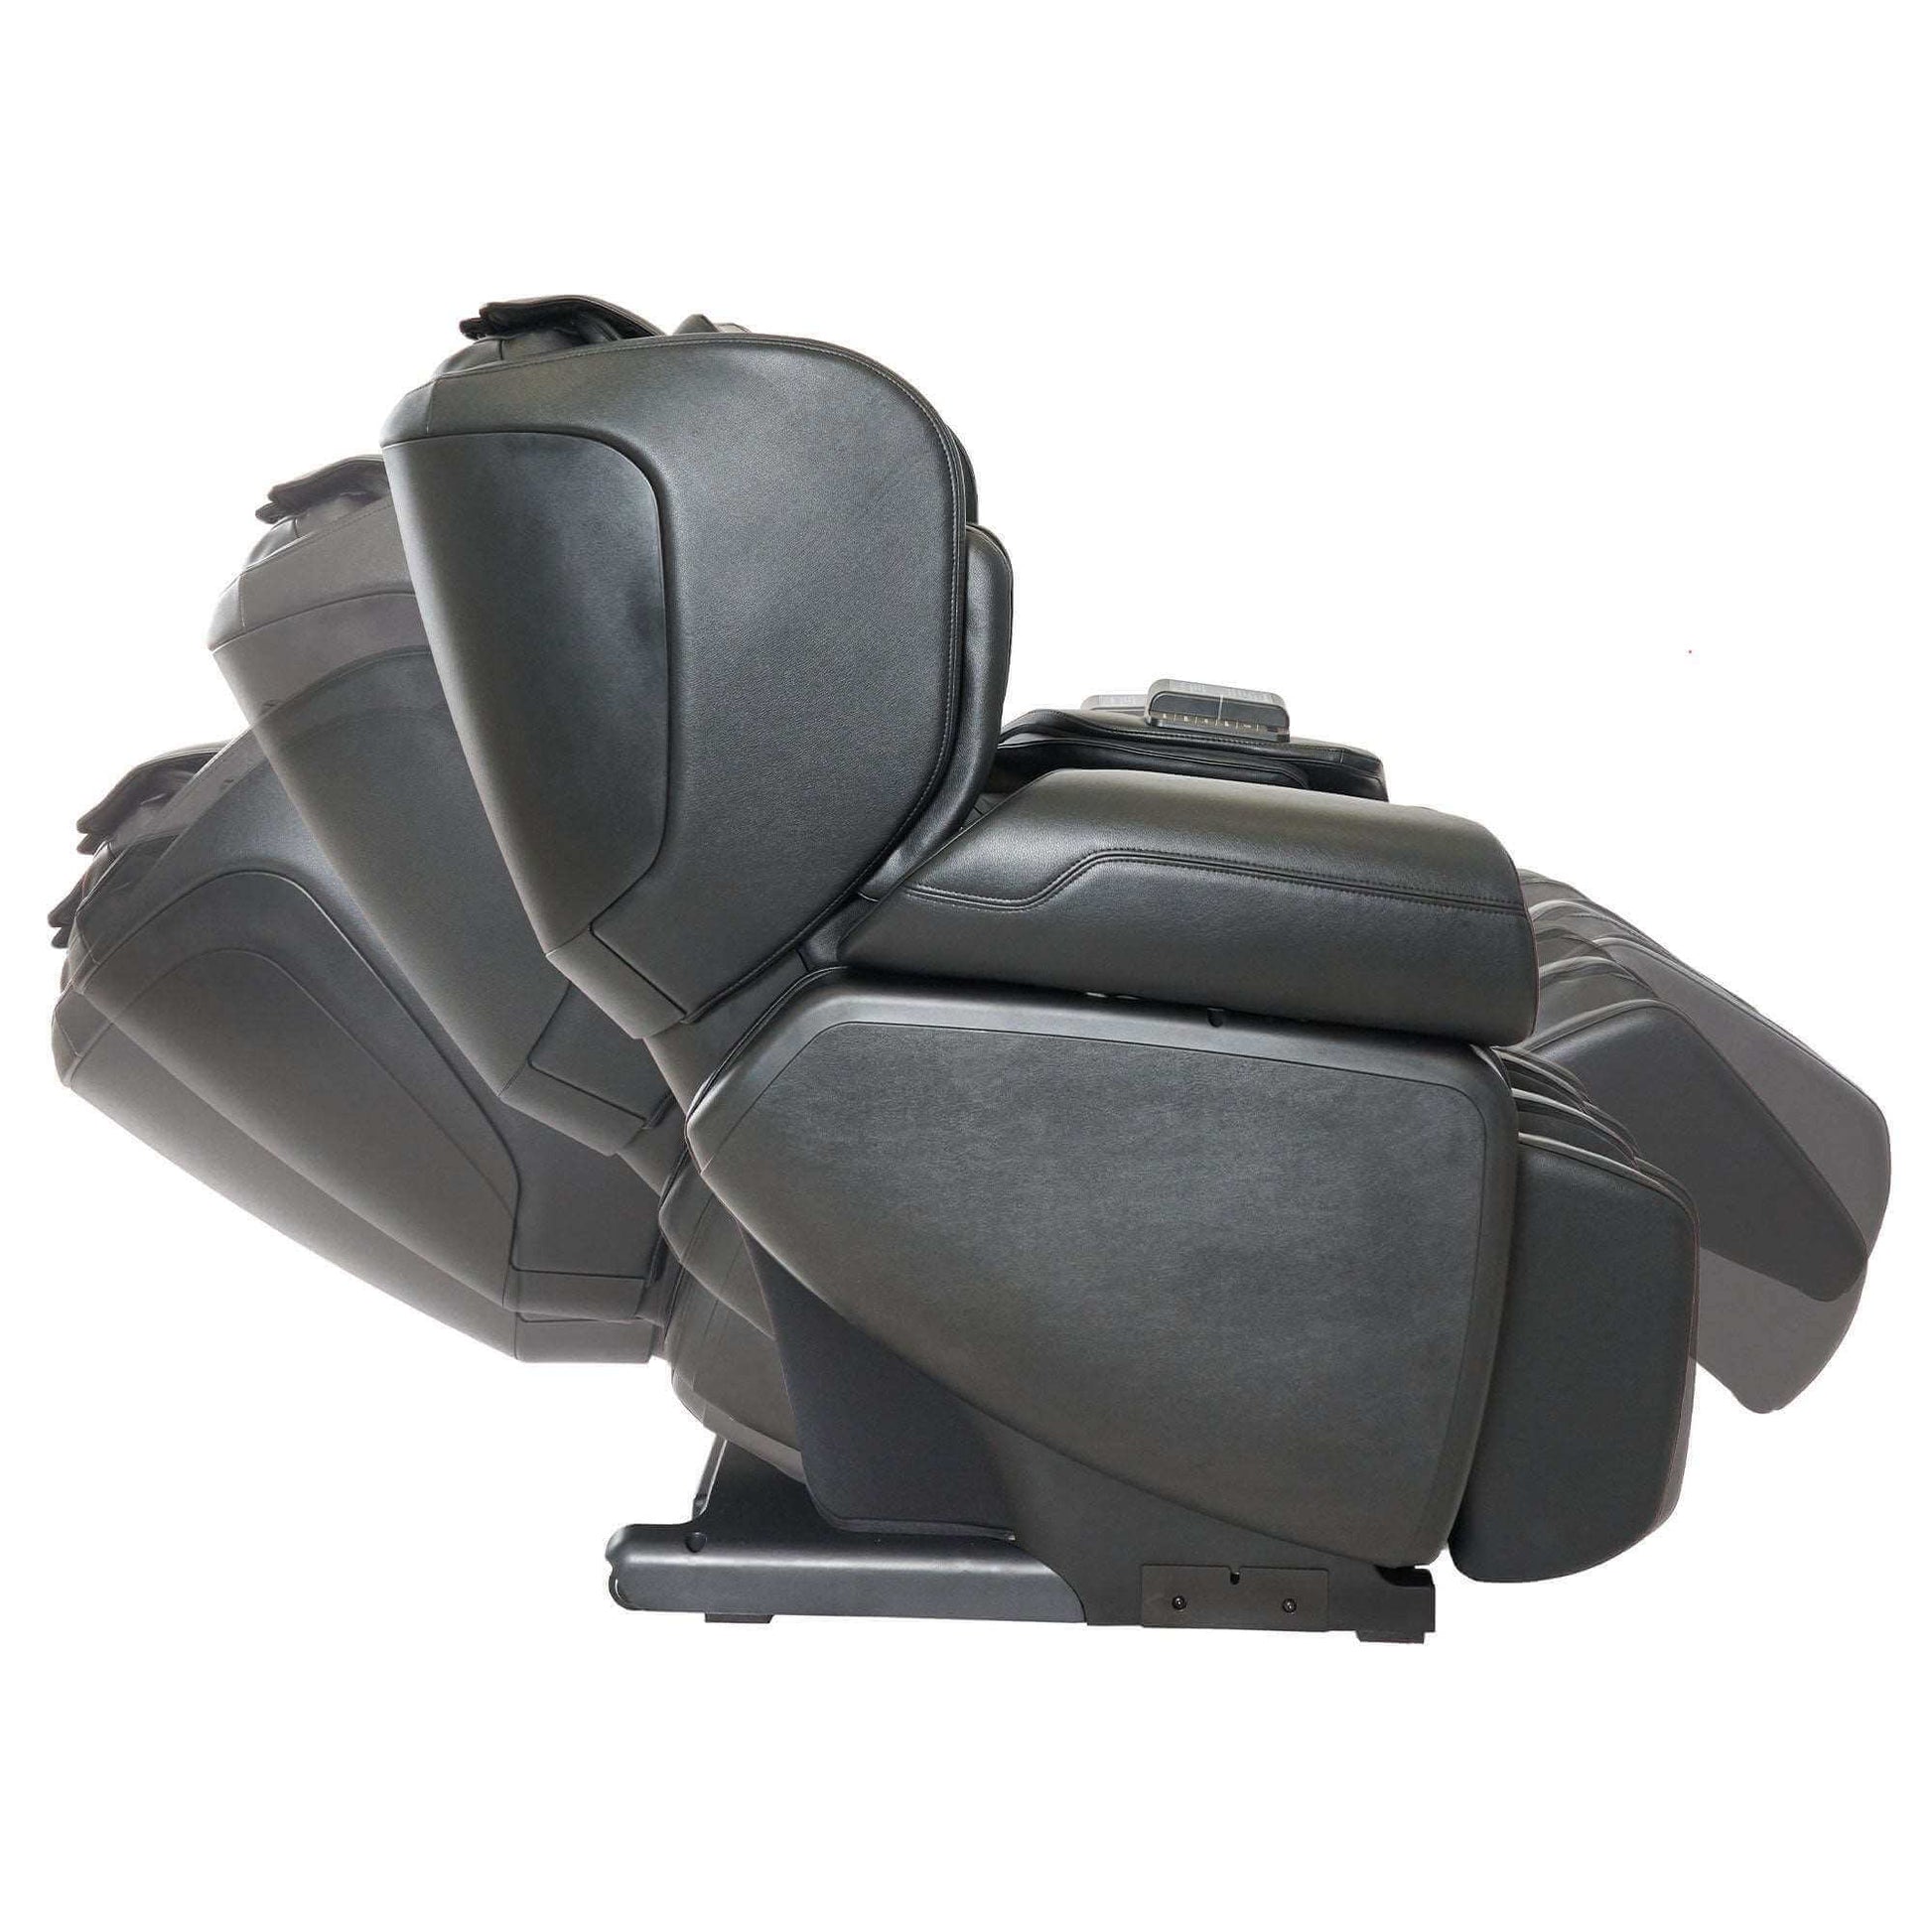 Synca Wellness Kurodo E - Premium Commercial Massage Chair - Electric Massaging Chairs